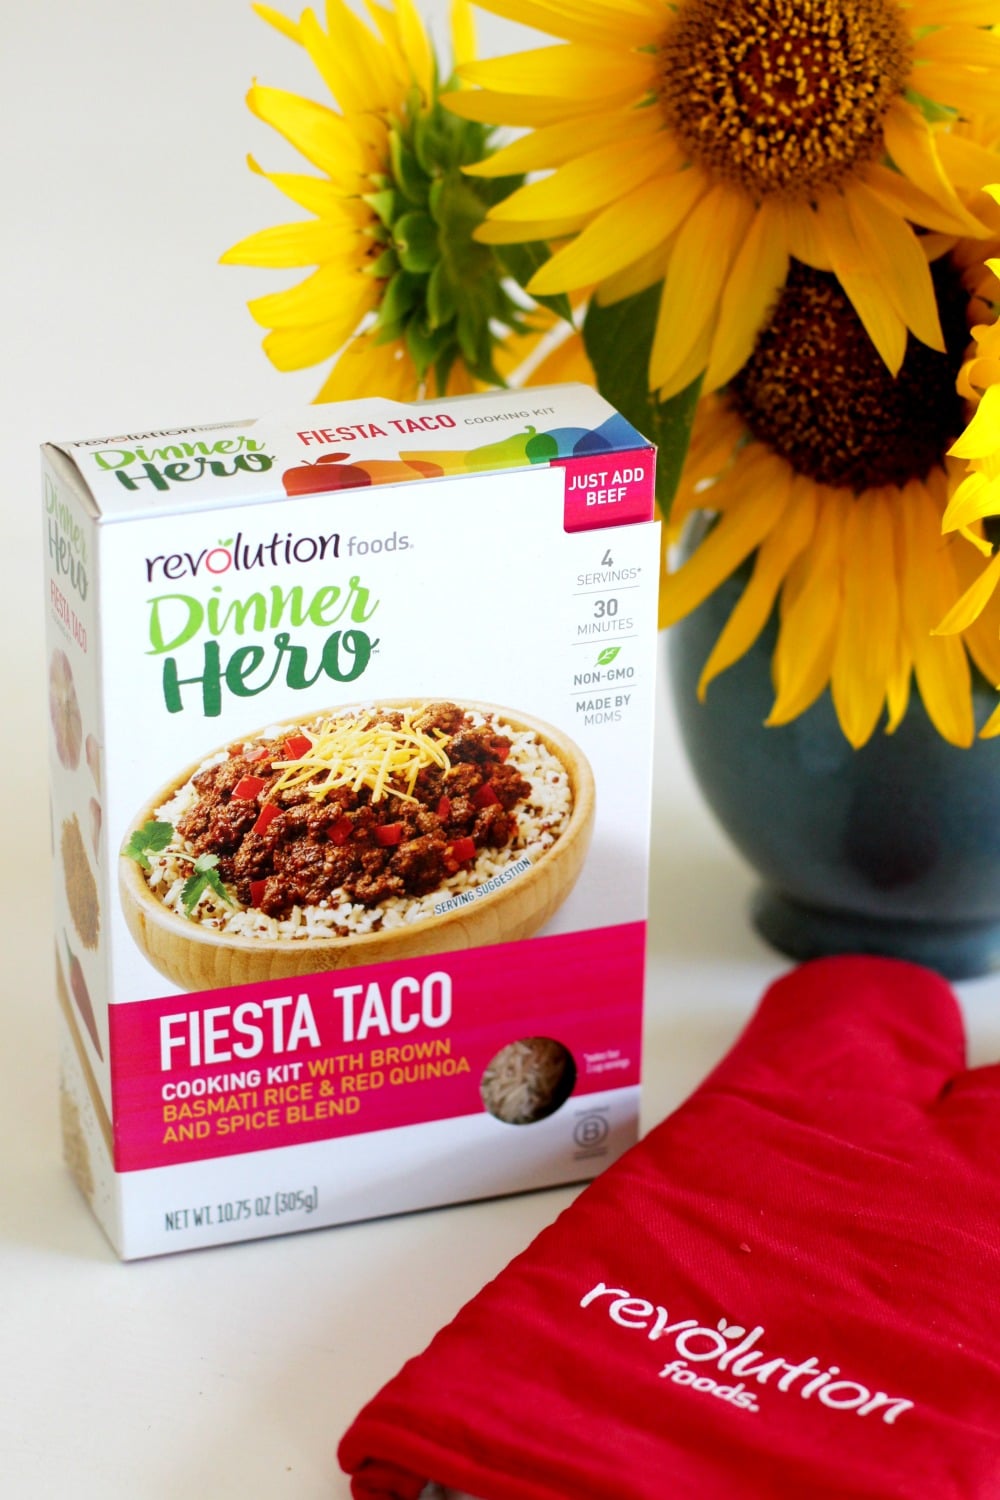 Dinner Hero Fiesta Taco Kit